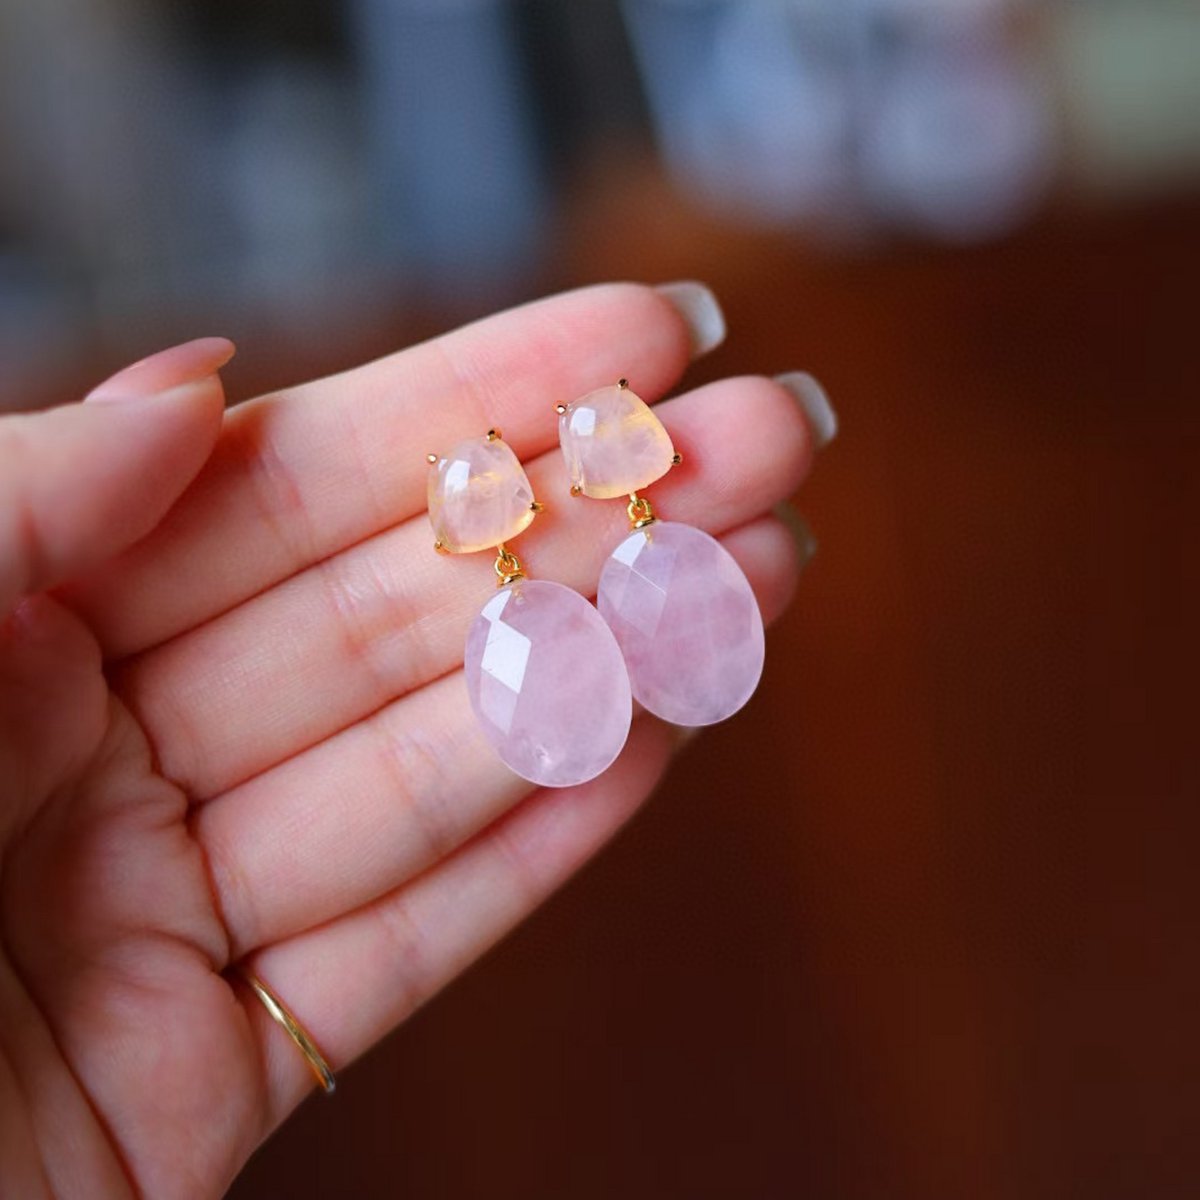 Romantic princess style rose quartz crystal drop earrings - Gold vermeil - Stone of Love